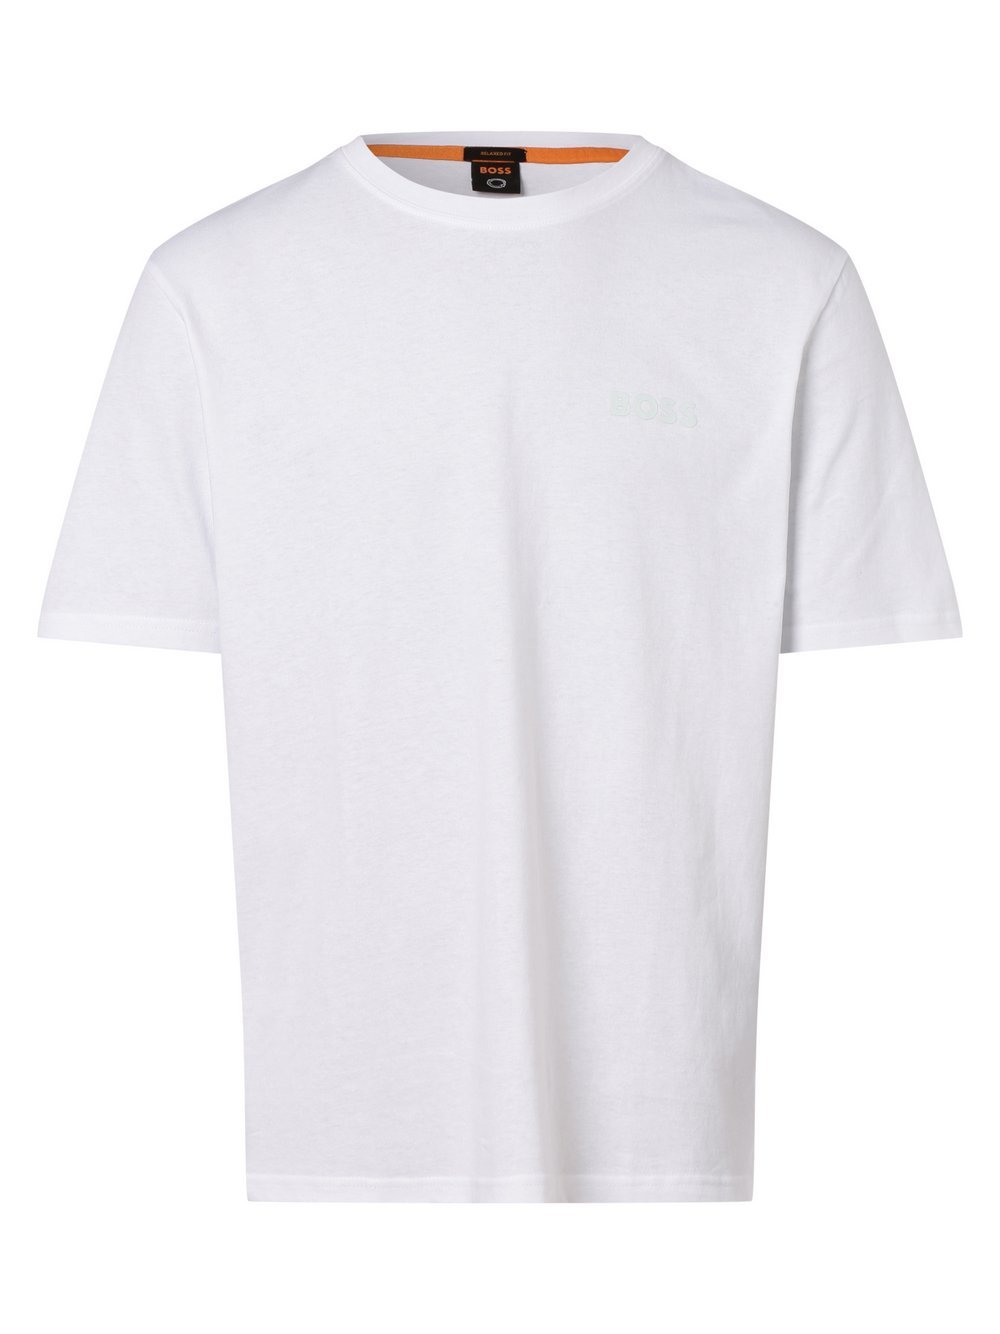 BOSS Orange - T-shirt męski – Teeback, biały